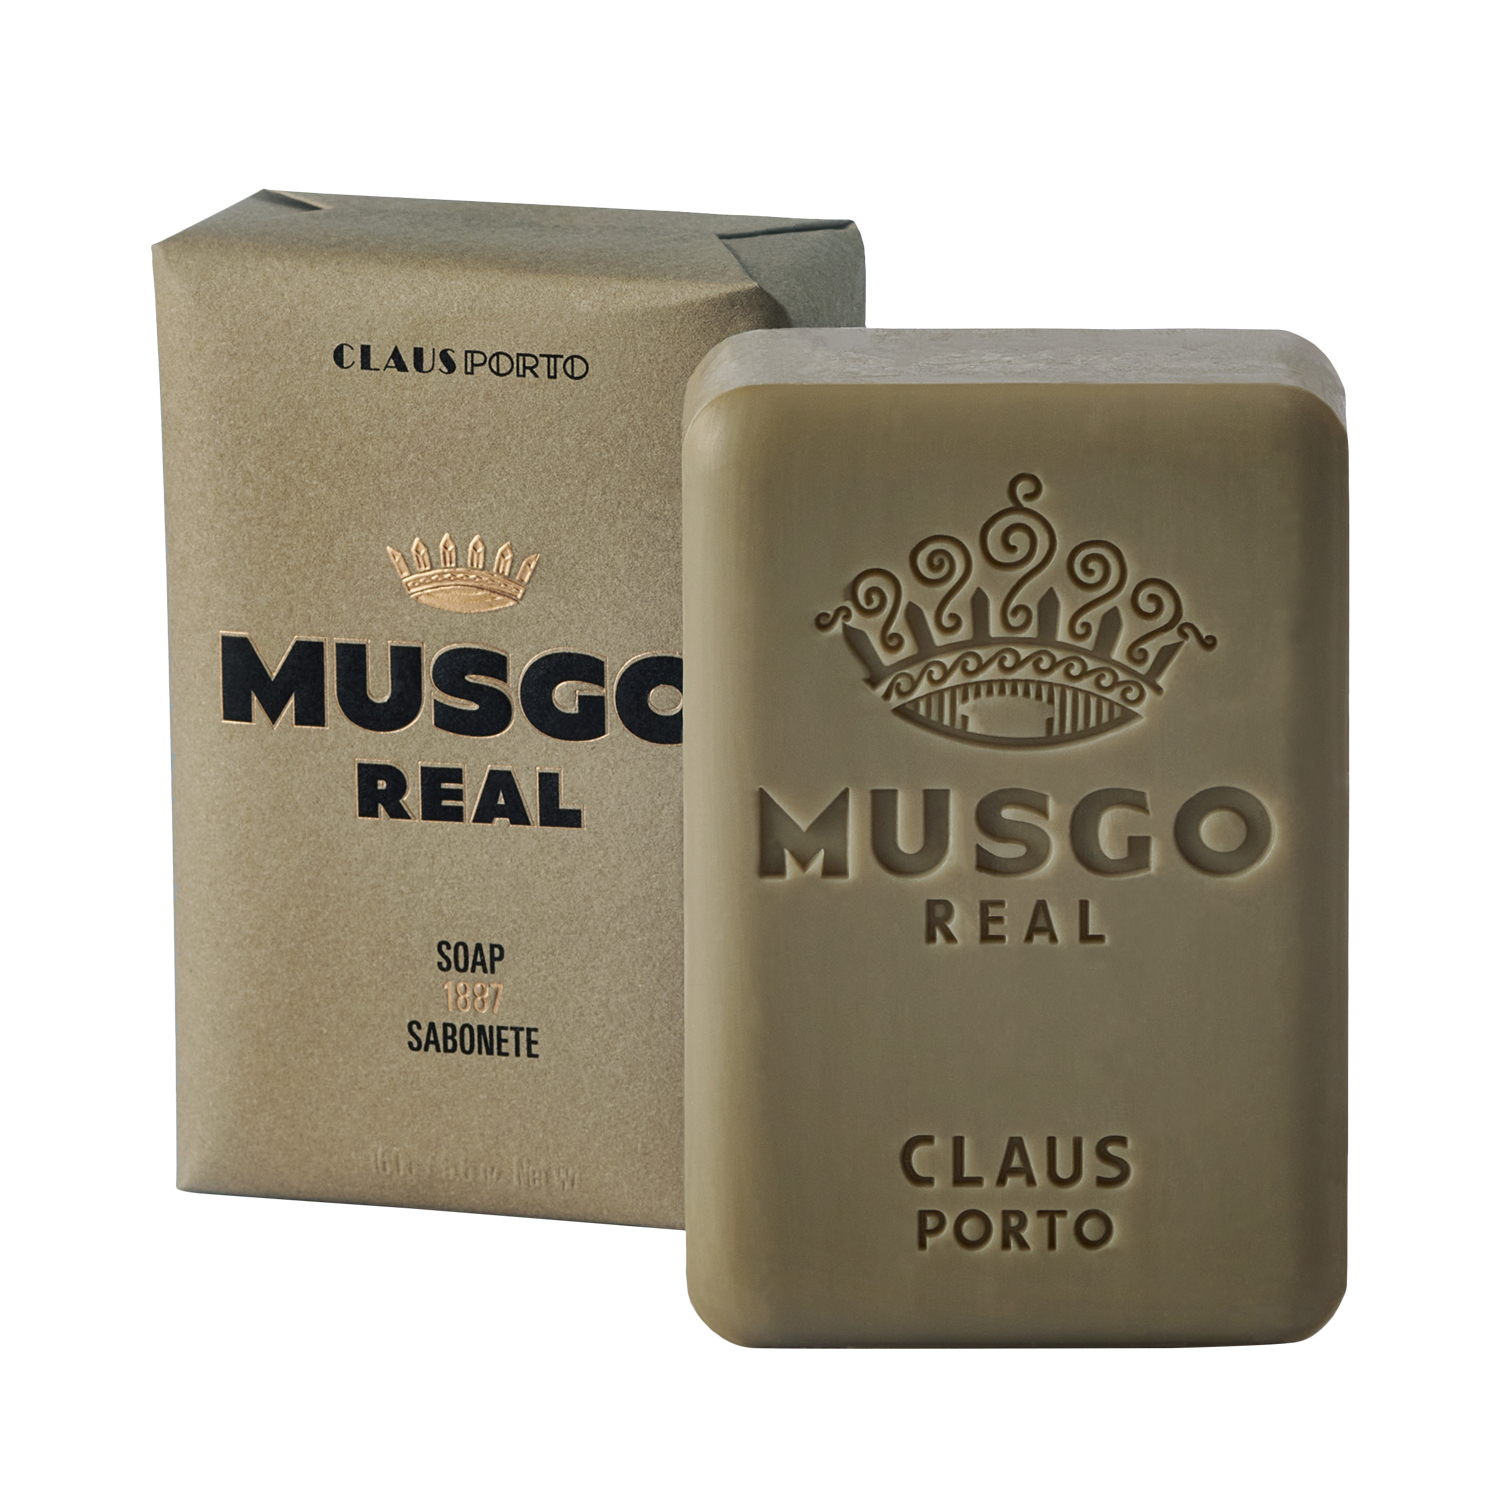 Musgo Real - Soap - 1887 - Körperseife